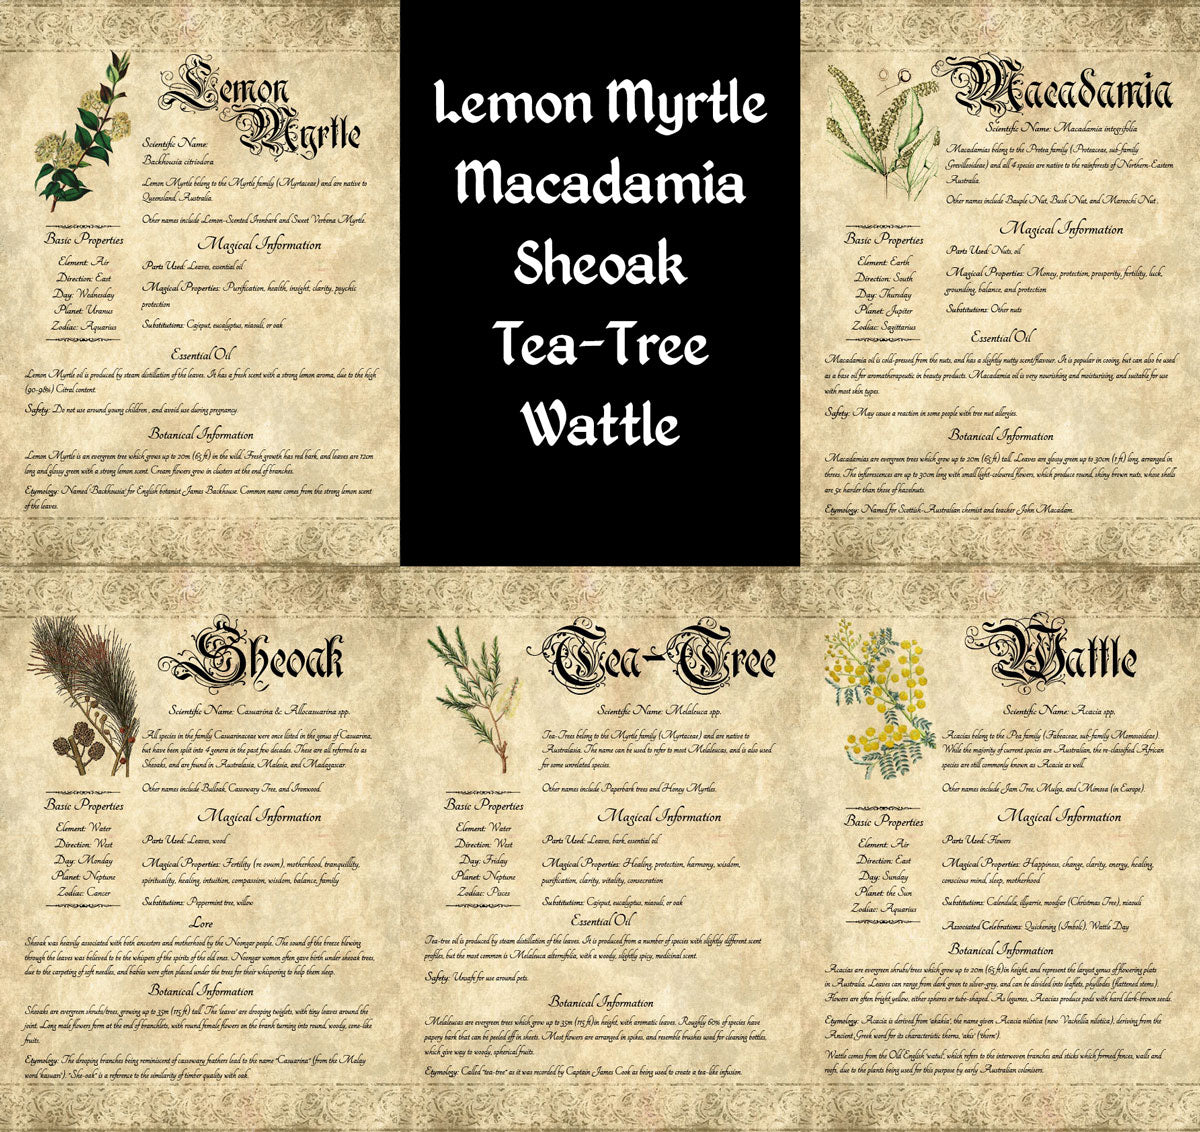 Collage of antique-style grimoire pages; text lists "Lemon Myrtle, Macadamia, Sheoak, Tea-Tree, Wattle"